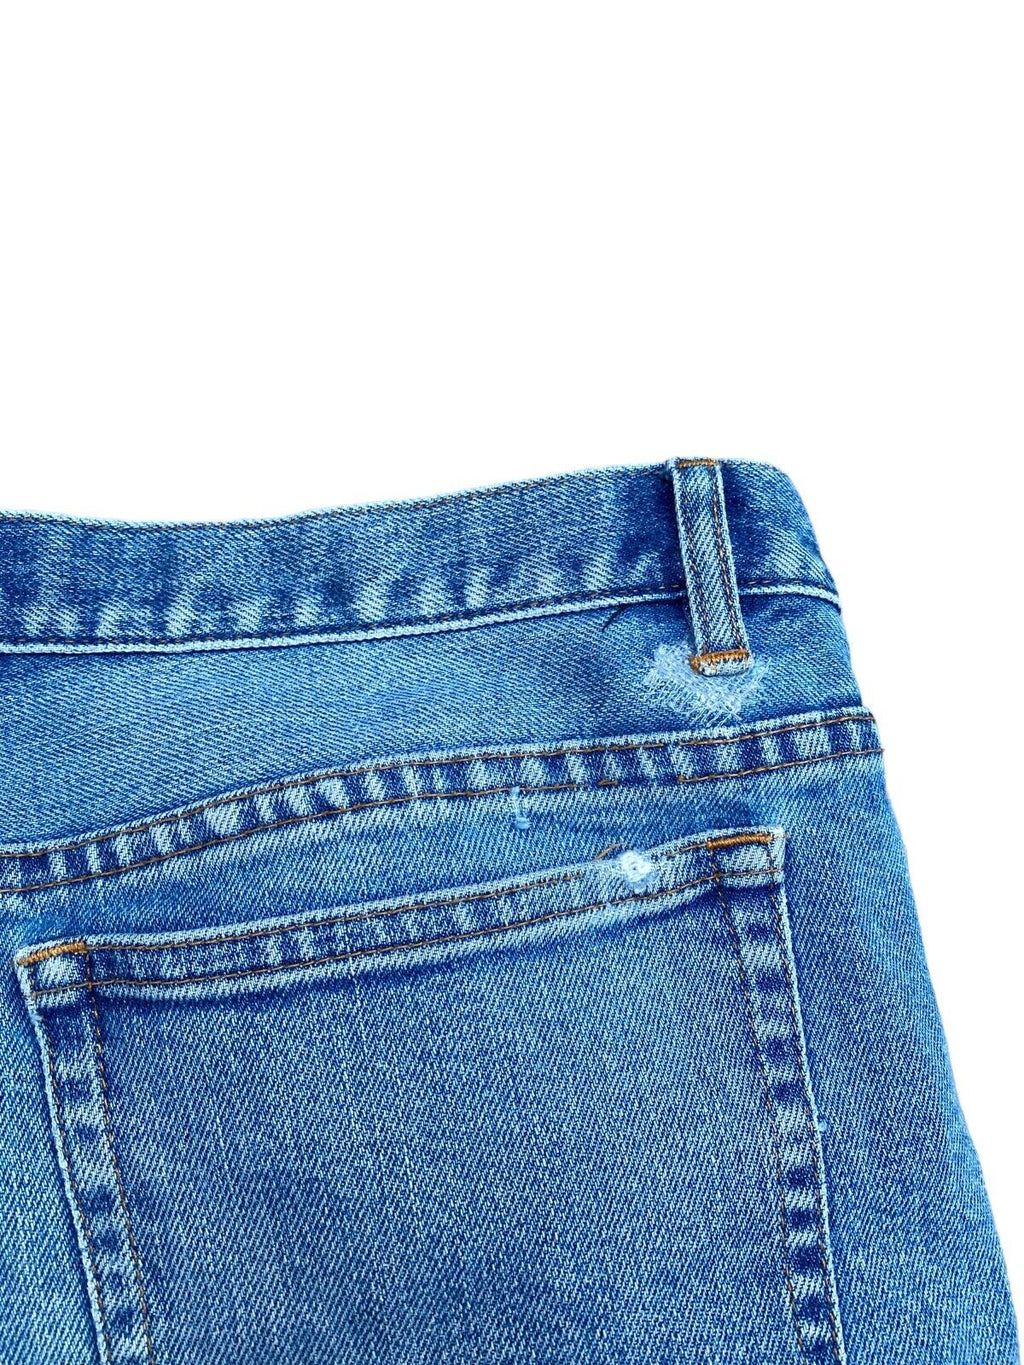 Butler Denim Jeans   Petit New Standard  Slim Fit   Size 33 APC